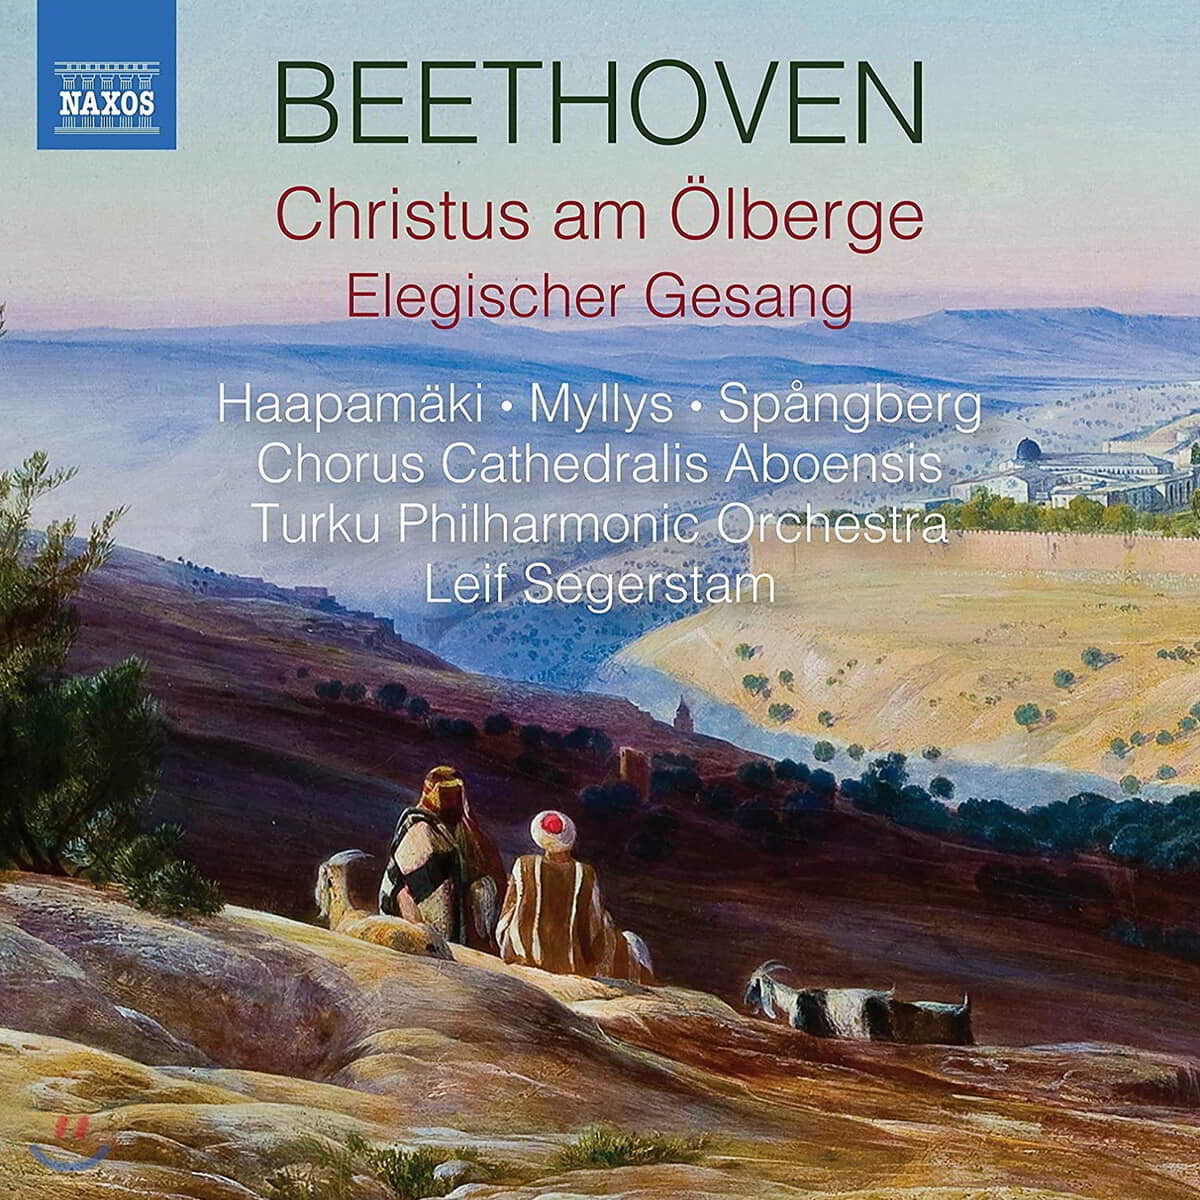 Leif Segerstam 베토벤: 오라토리오 &#39;감람산 위의 그리스도&#39;, 비가 (Beethoven: Christus am Olberge, Elegischer Gesang)